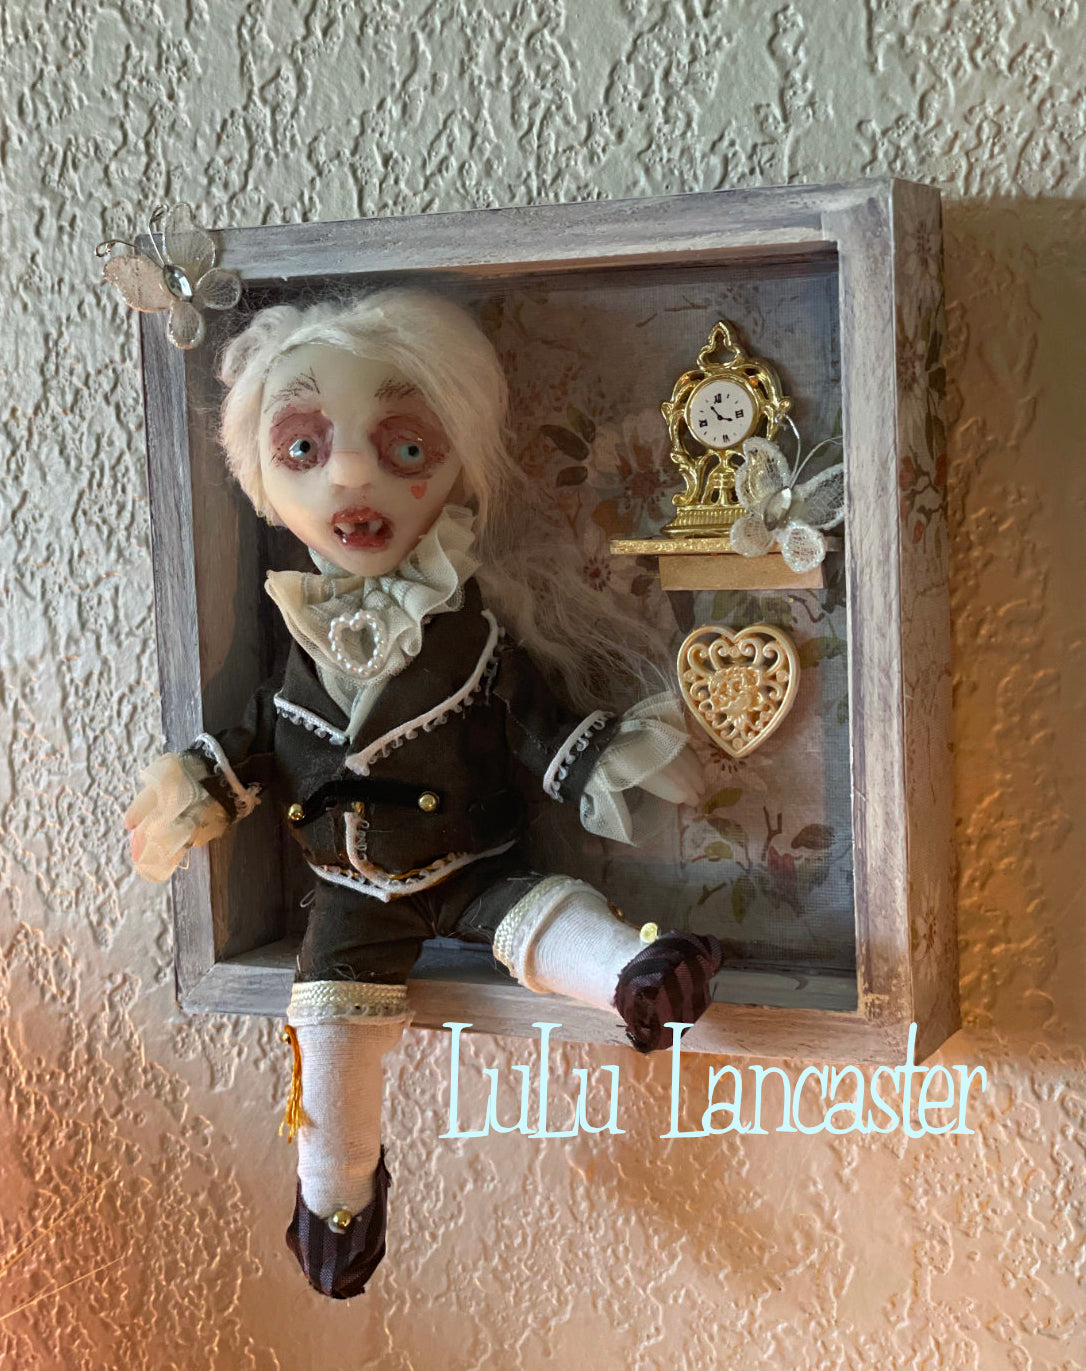 Little Bite Lestat miniature Original LuLu Lancaster Art Doll